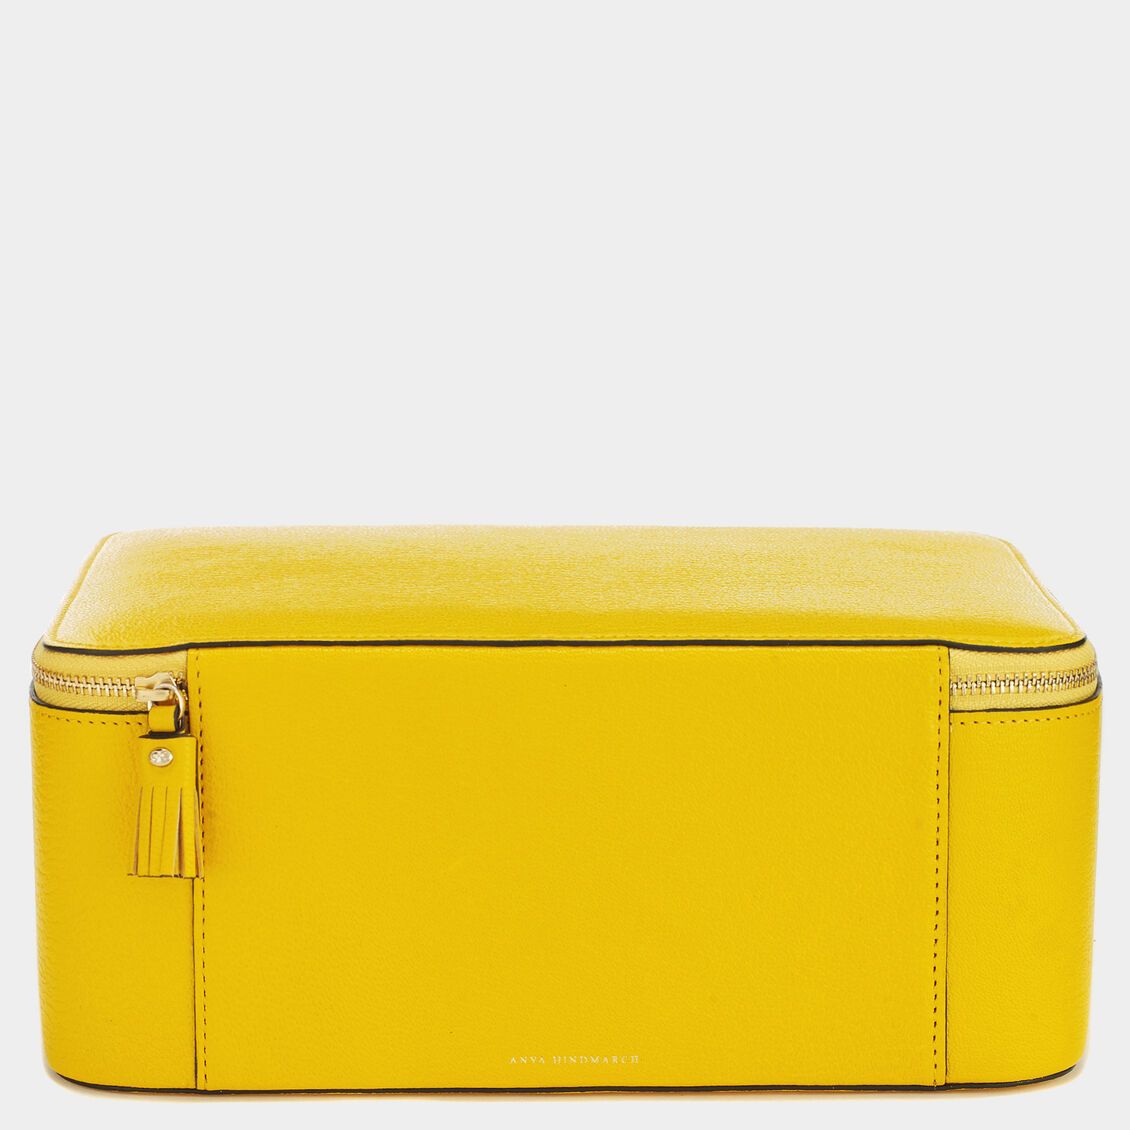 The Yellow Nayab Cash Box – Cippele